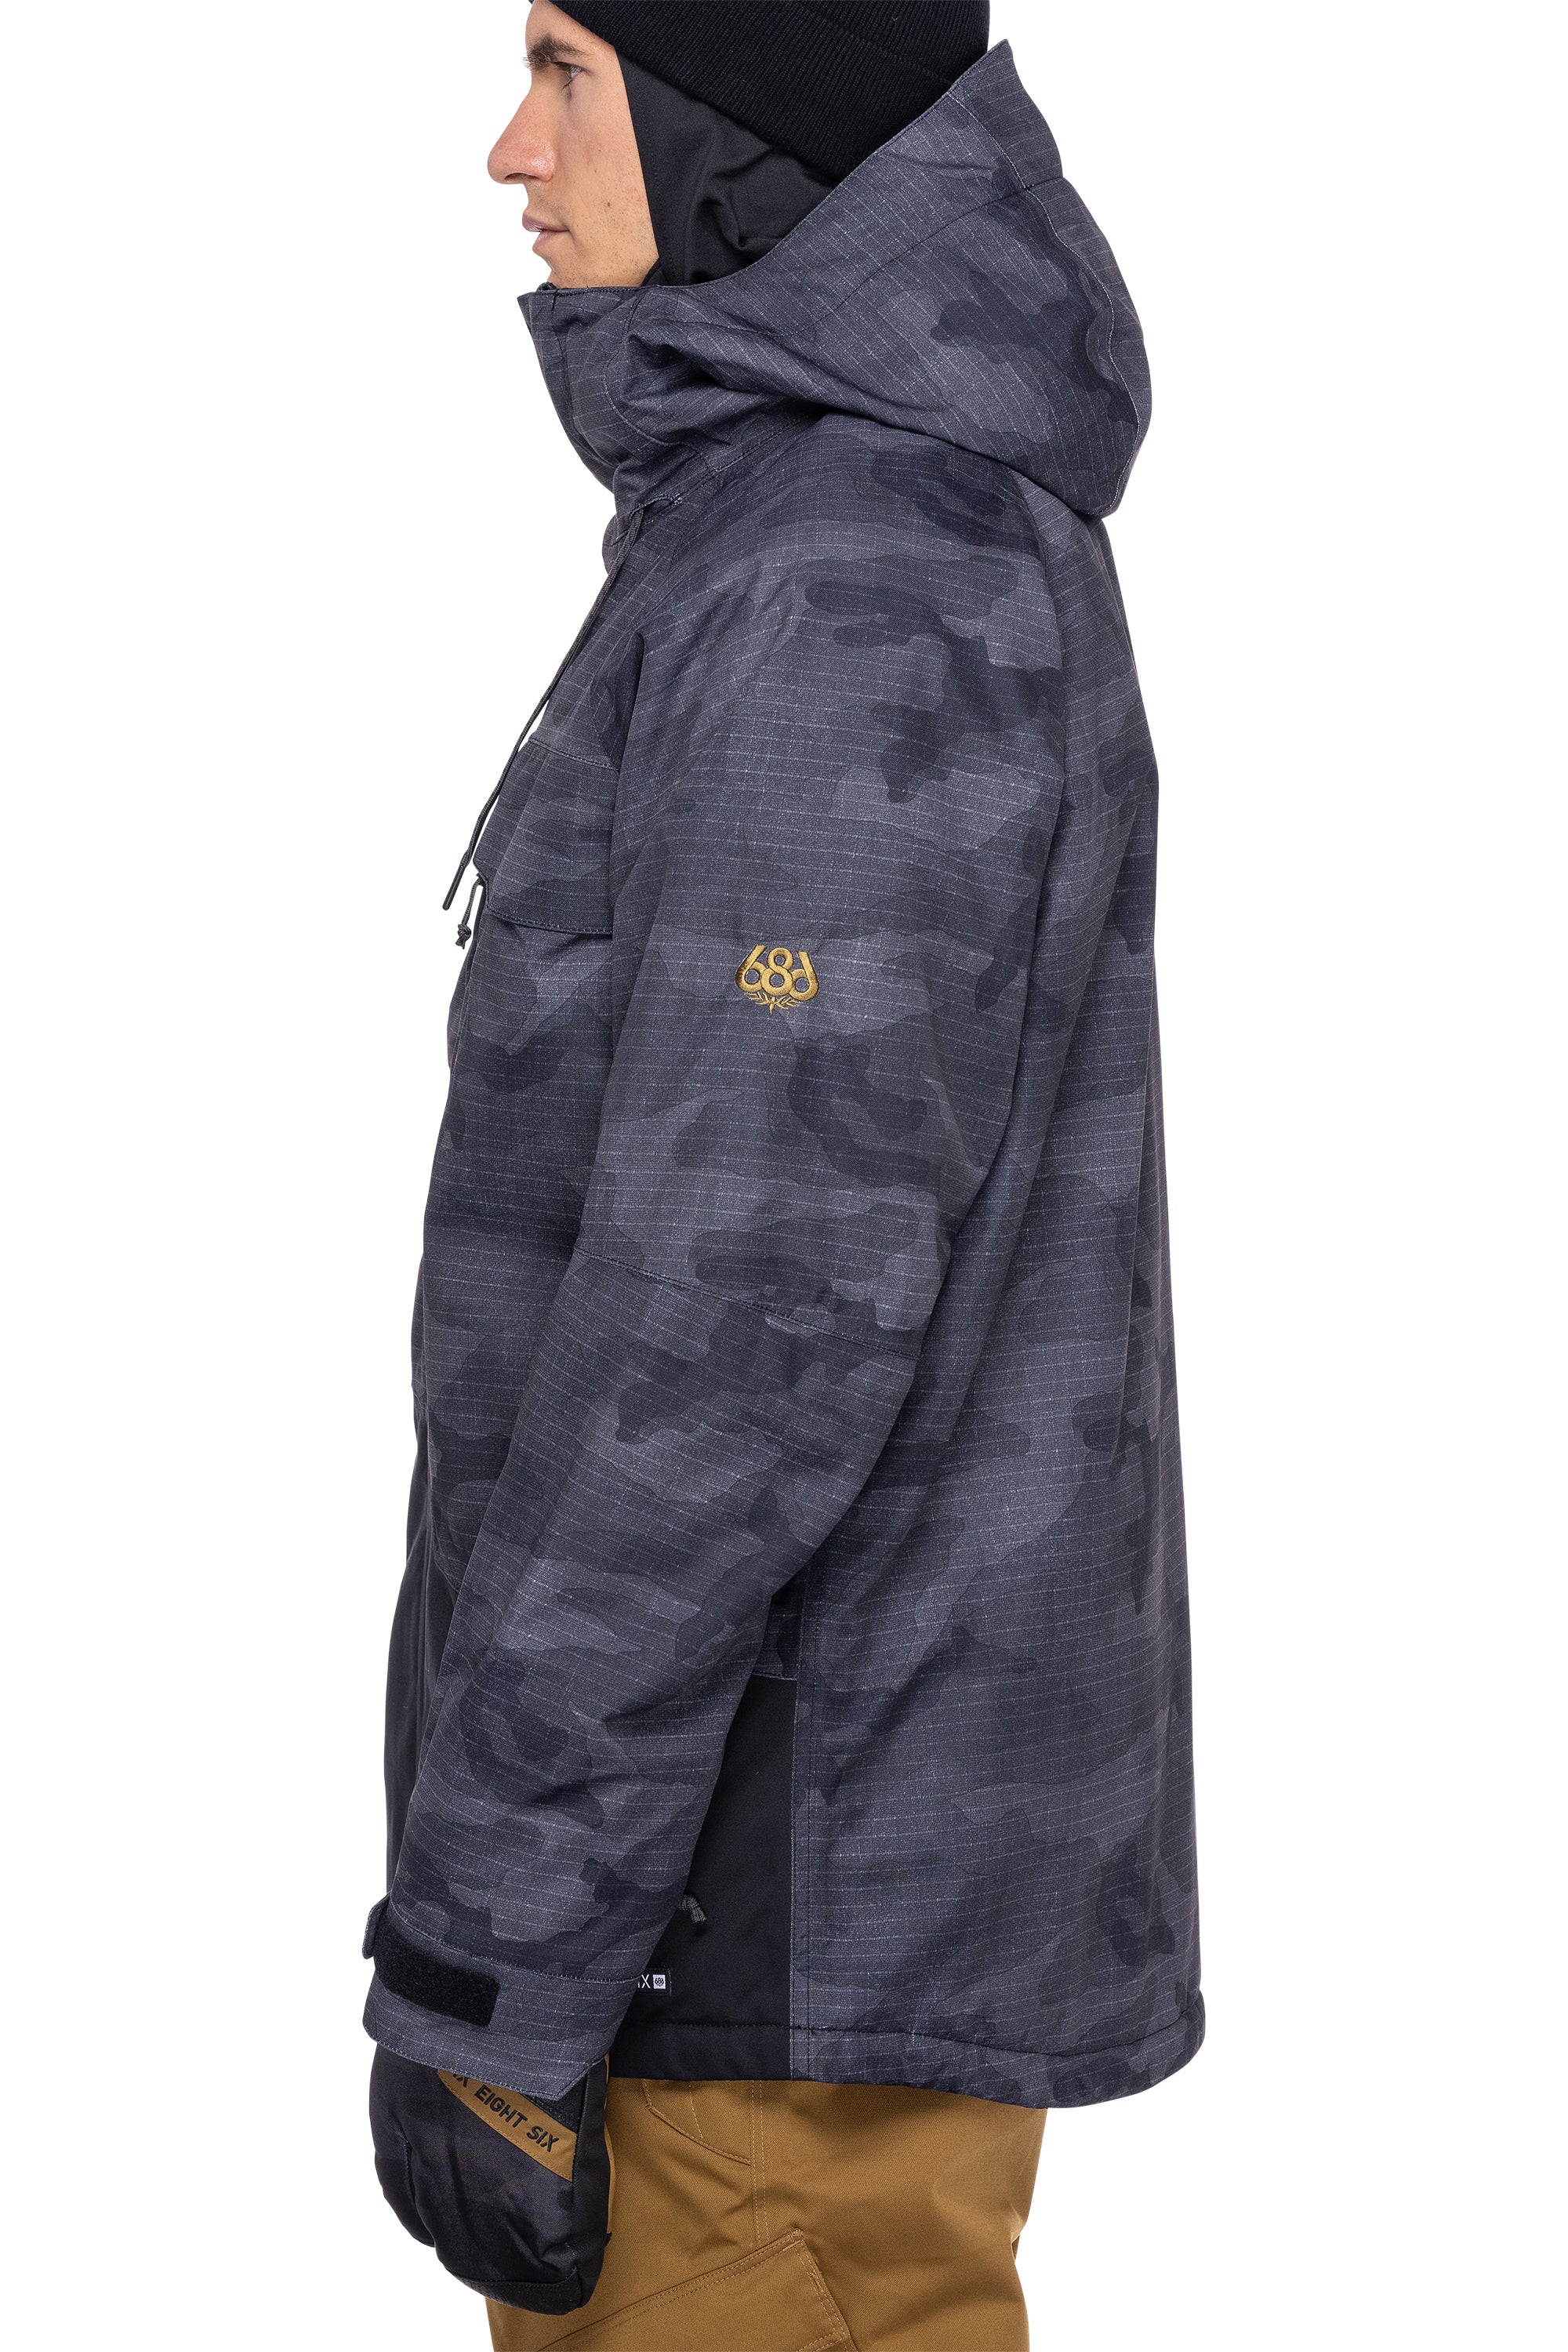 686 Geo Insulated Men's Jacket - 88 Gear